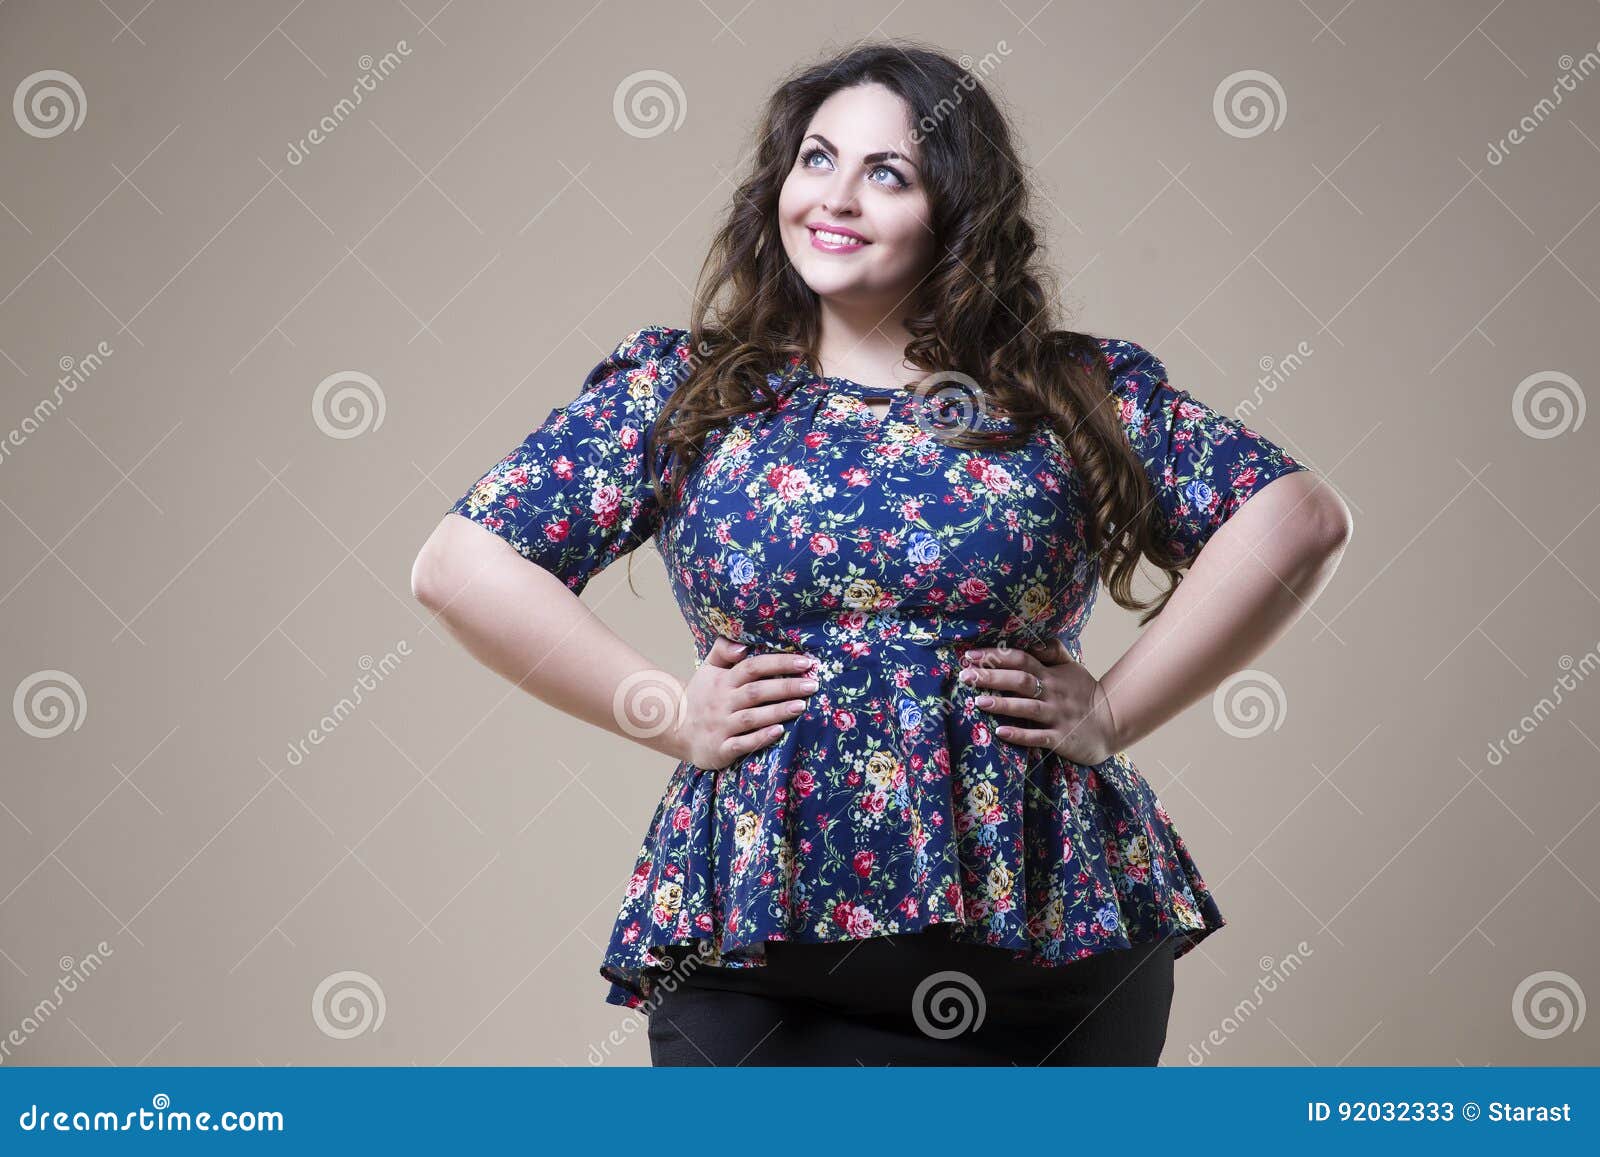 25,179 Fat Fashion Woman Stock Photos - Free & Royalty-Free Stock ...